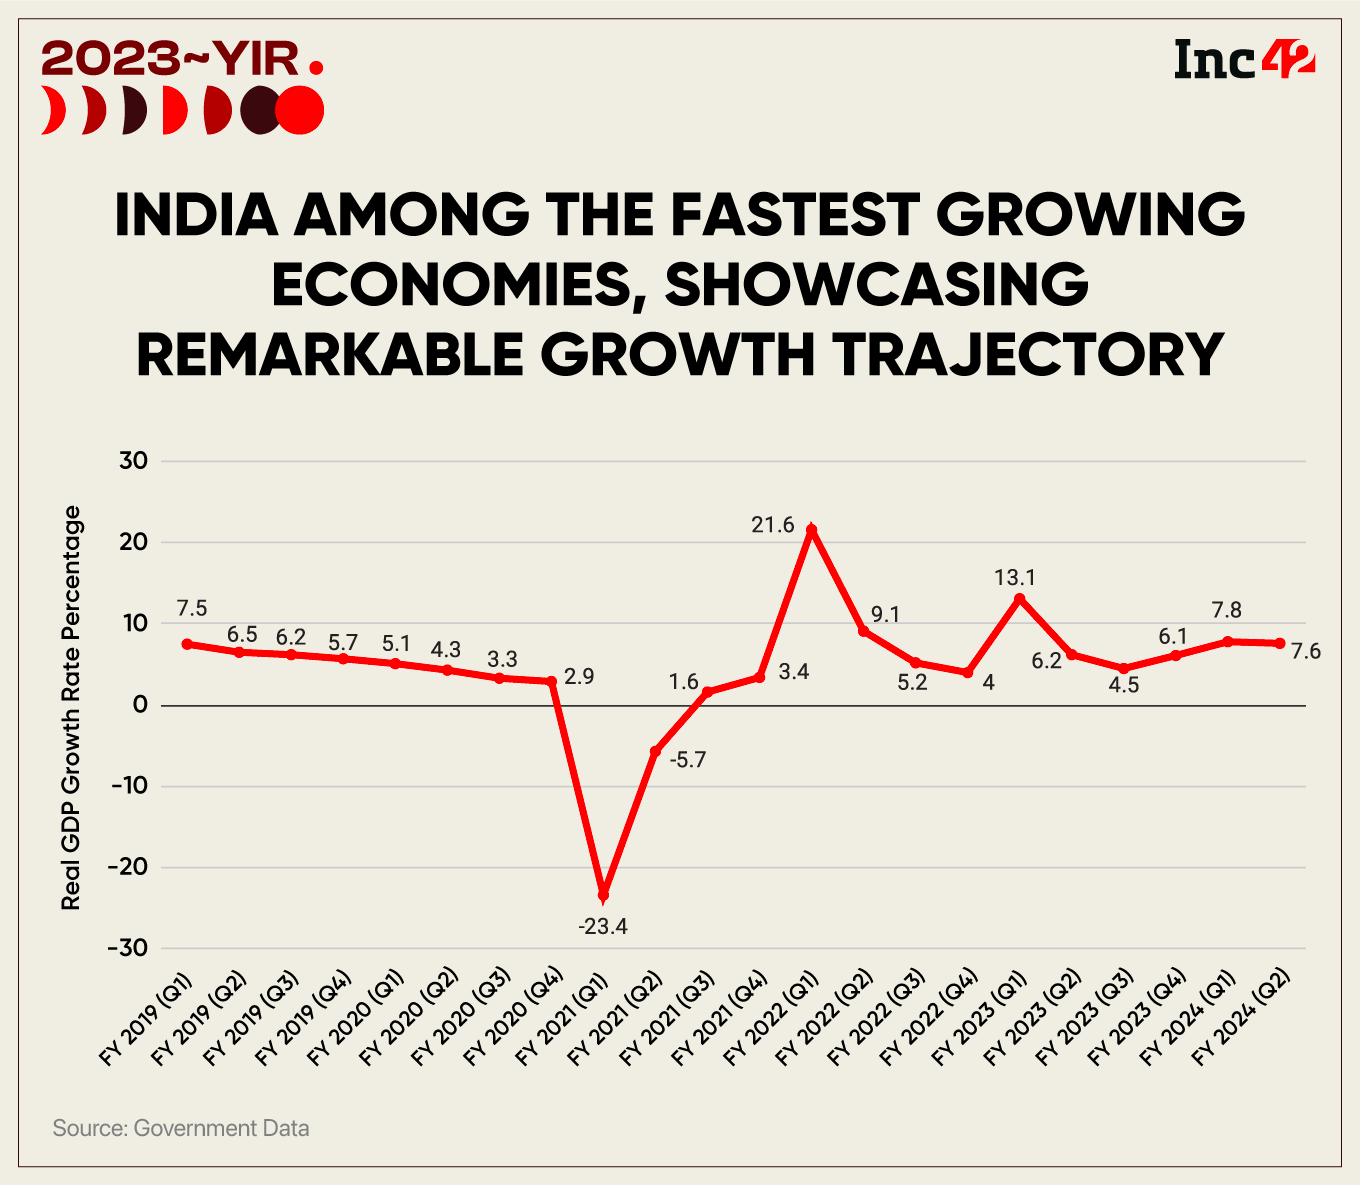 India's sharp economic recovery